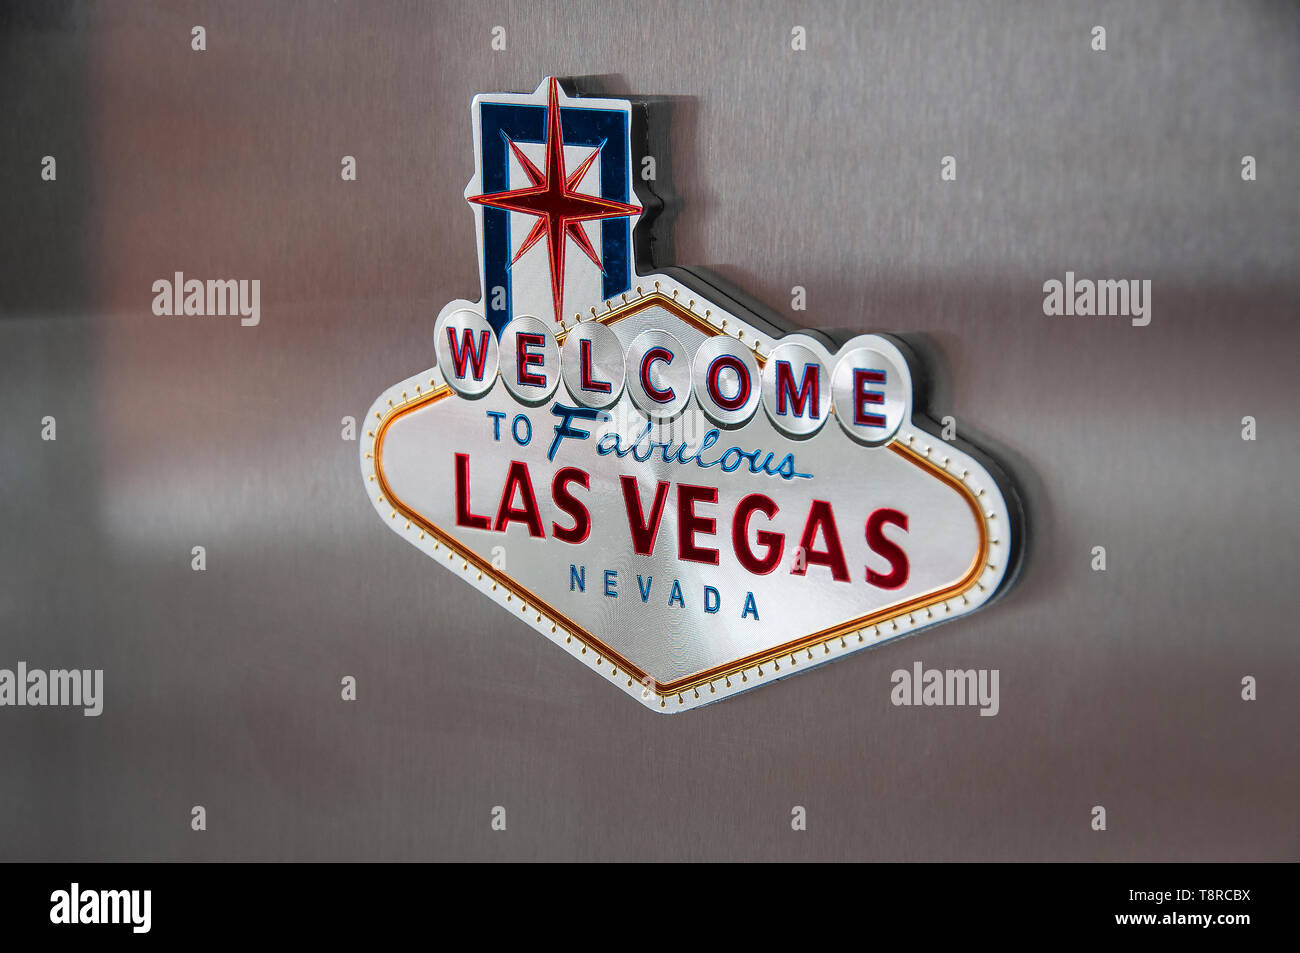 Las Vegas Fridge Magnet attached to a modern stainless steel fridge Stock Photo